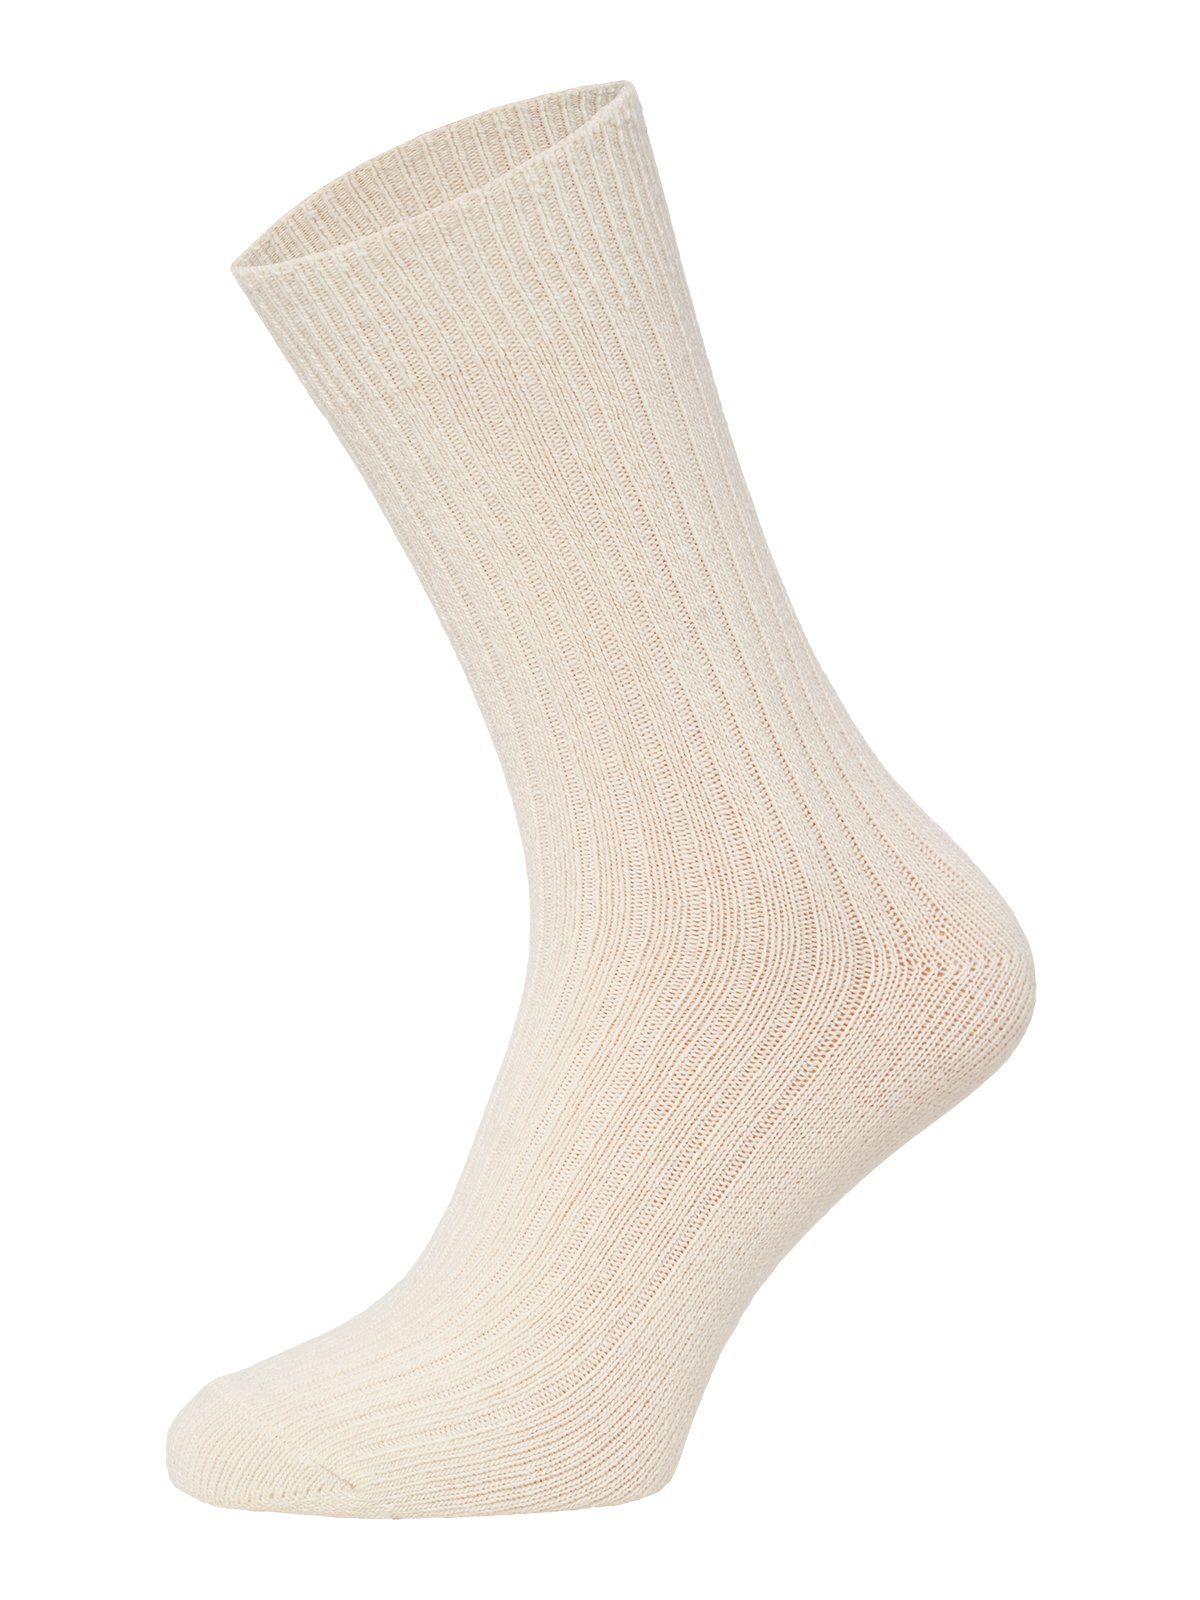 HomeOfSocks Socken Dünne Bunte Wollsocken mit 72% Wollanteil Hochwertige Uni Wollsocken Dünn Bunt Druckarm Creme